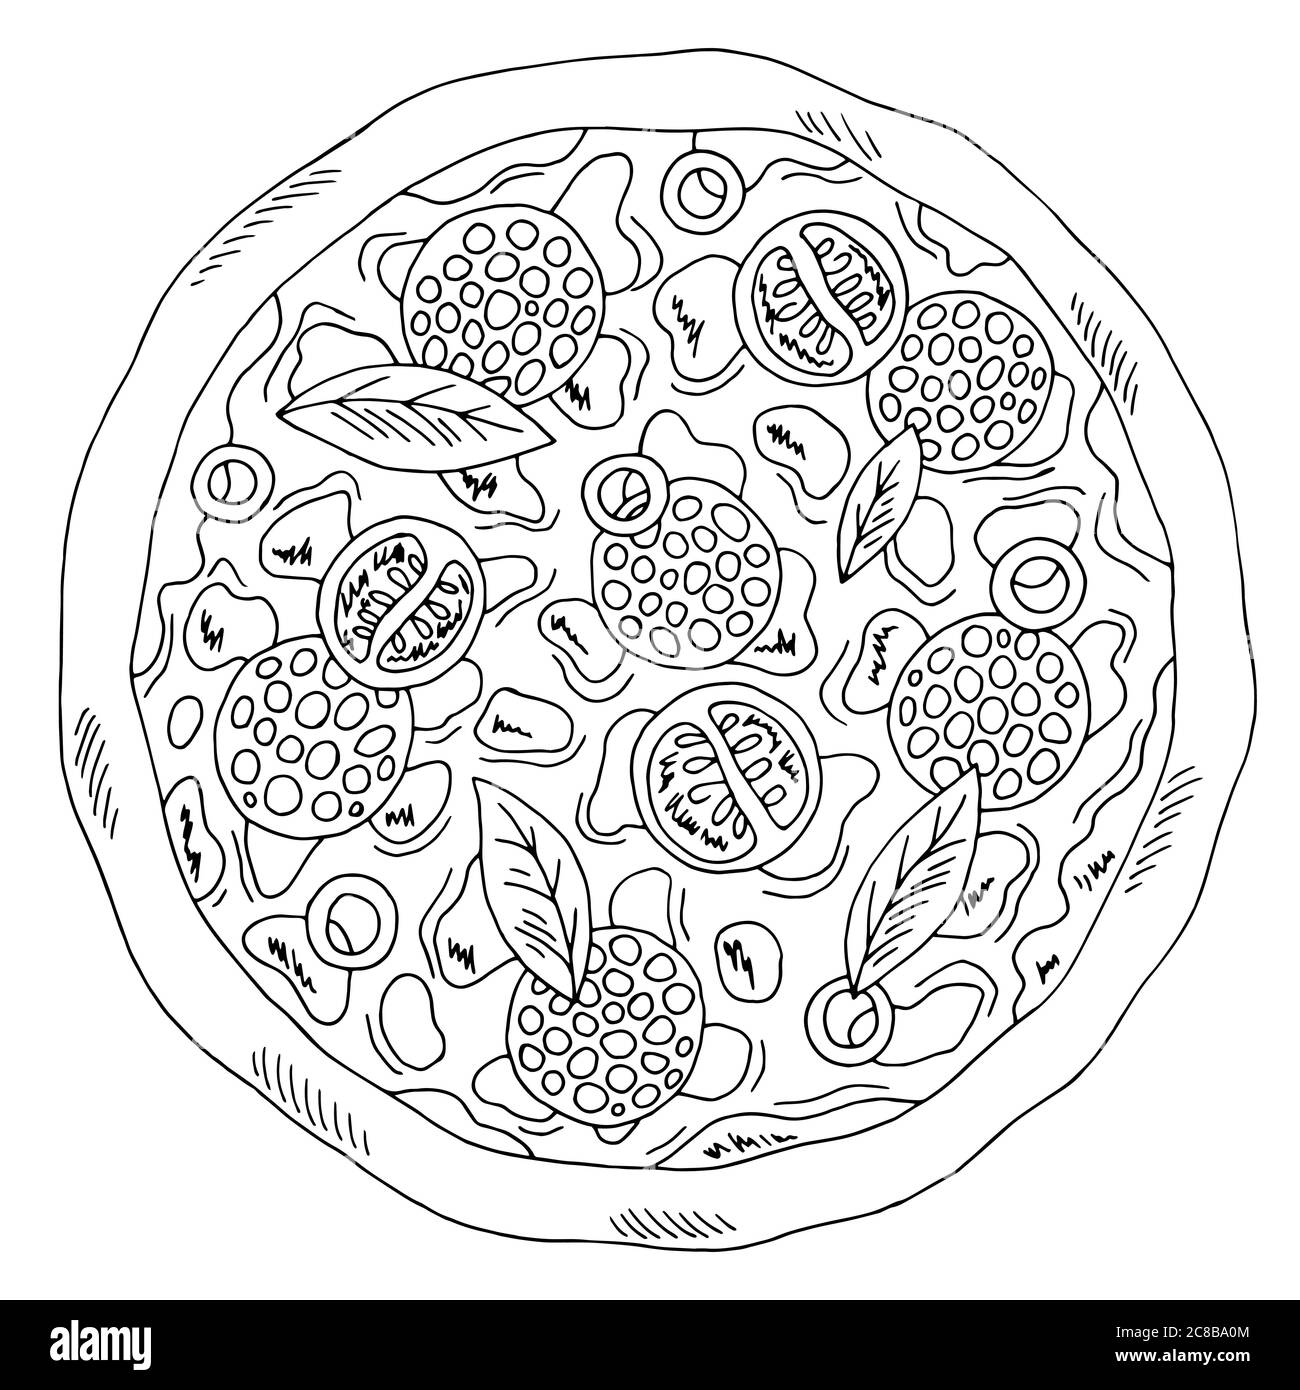 Pizza Grafik Fast Food schwarz weiß Skizze isoliert Illustration Vektor Stock Vektor